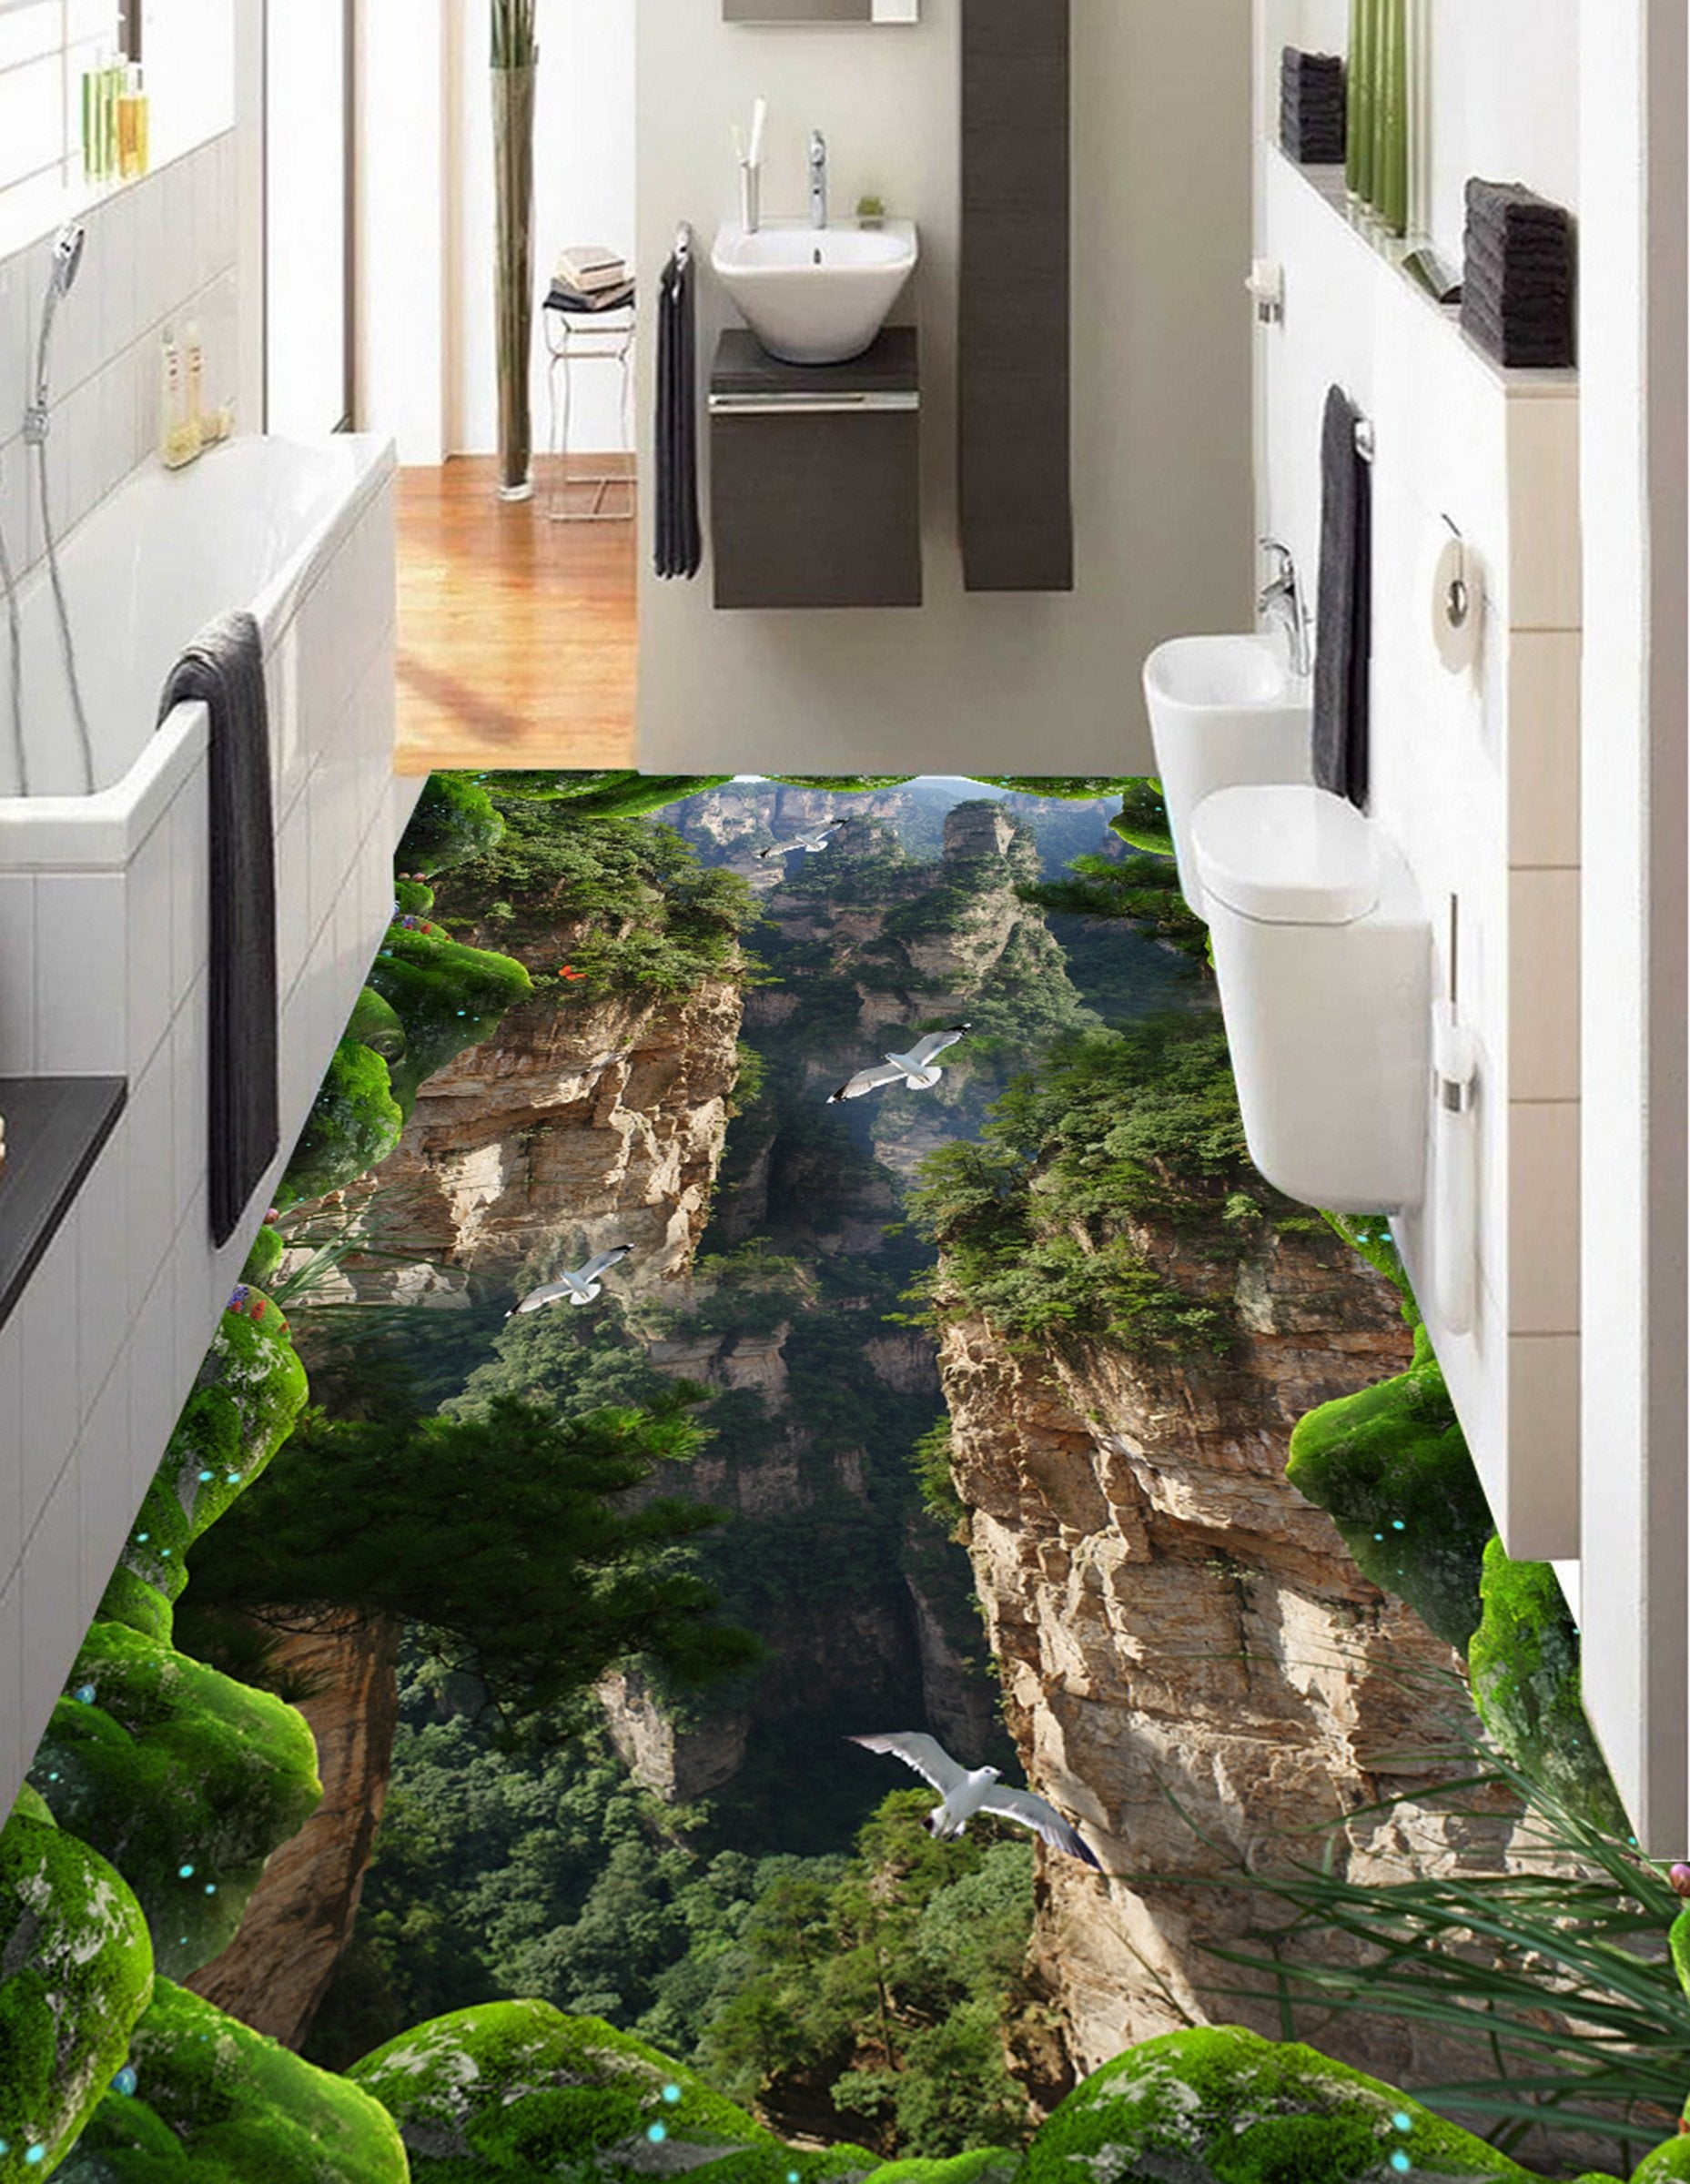 3D Valley Forest WG052 Floor Mural Wallpaper AJ Wallpaper 2 